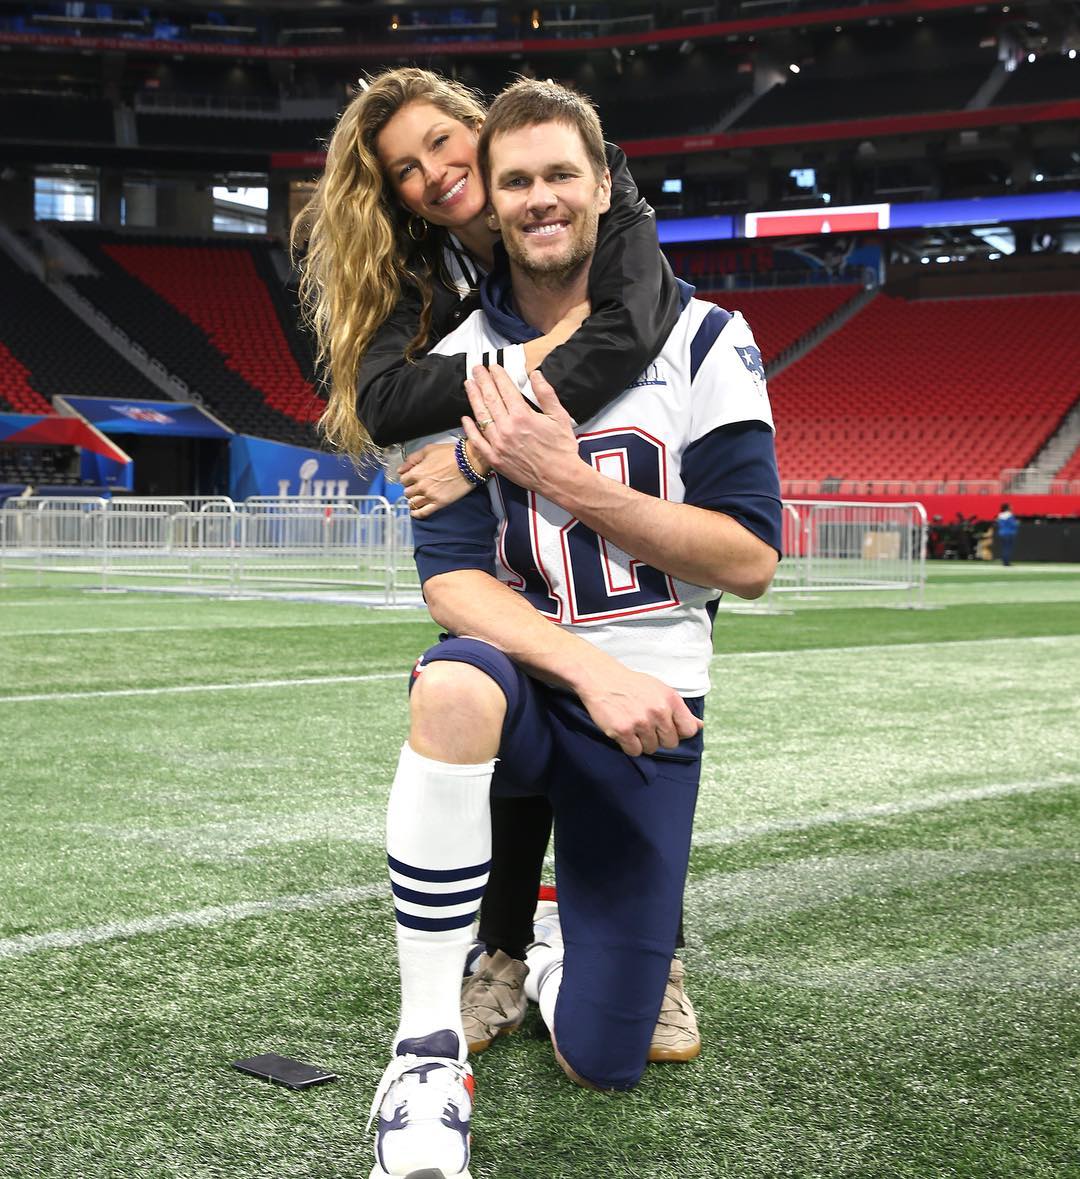 Gisele Bündchen shows love for Tom Brady ahead of Super Bowl